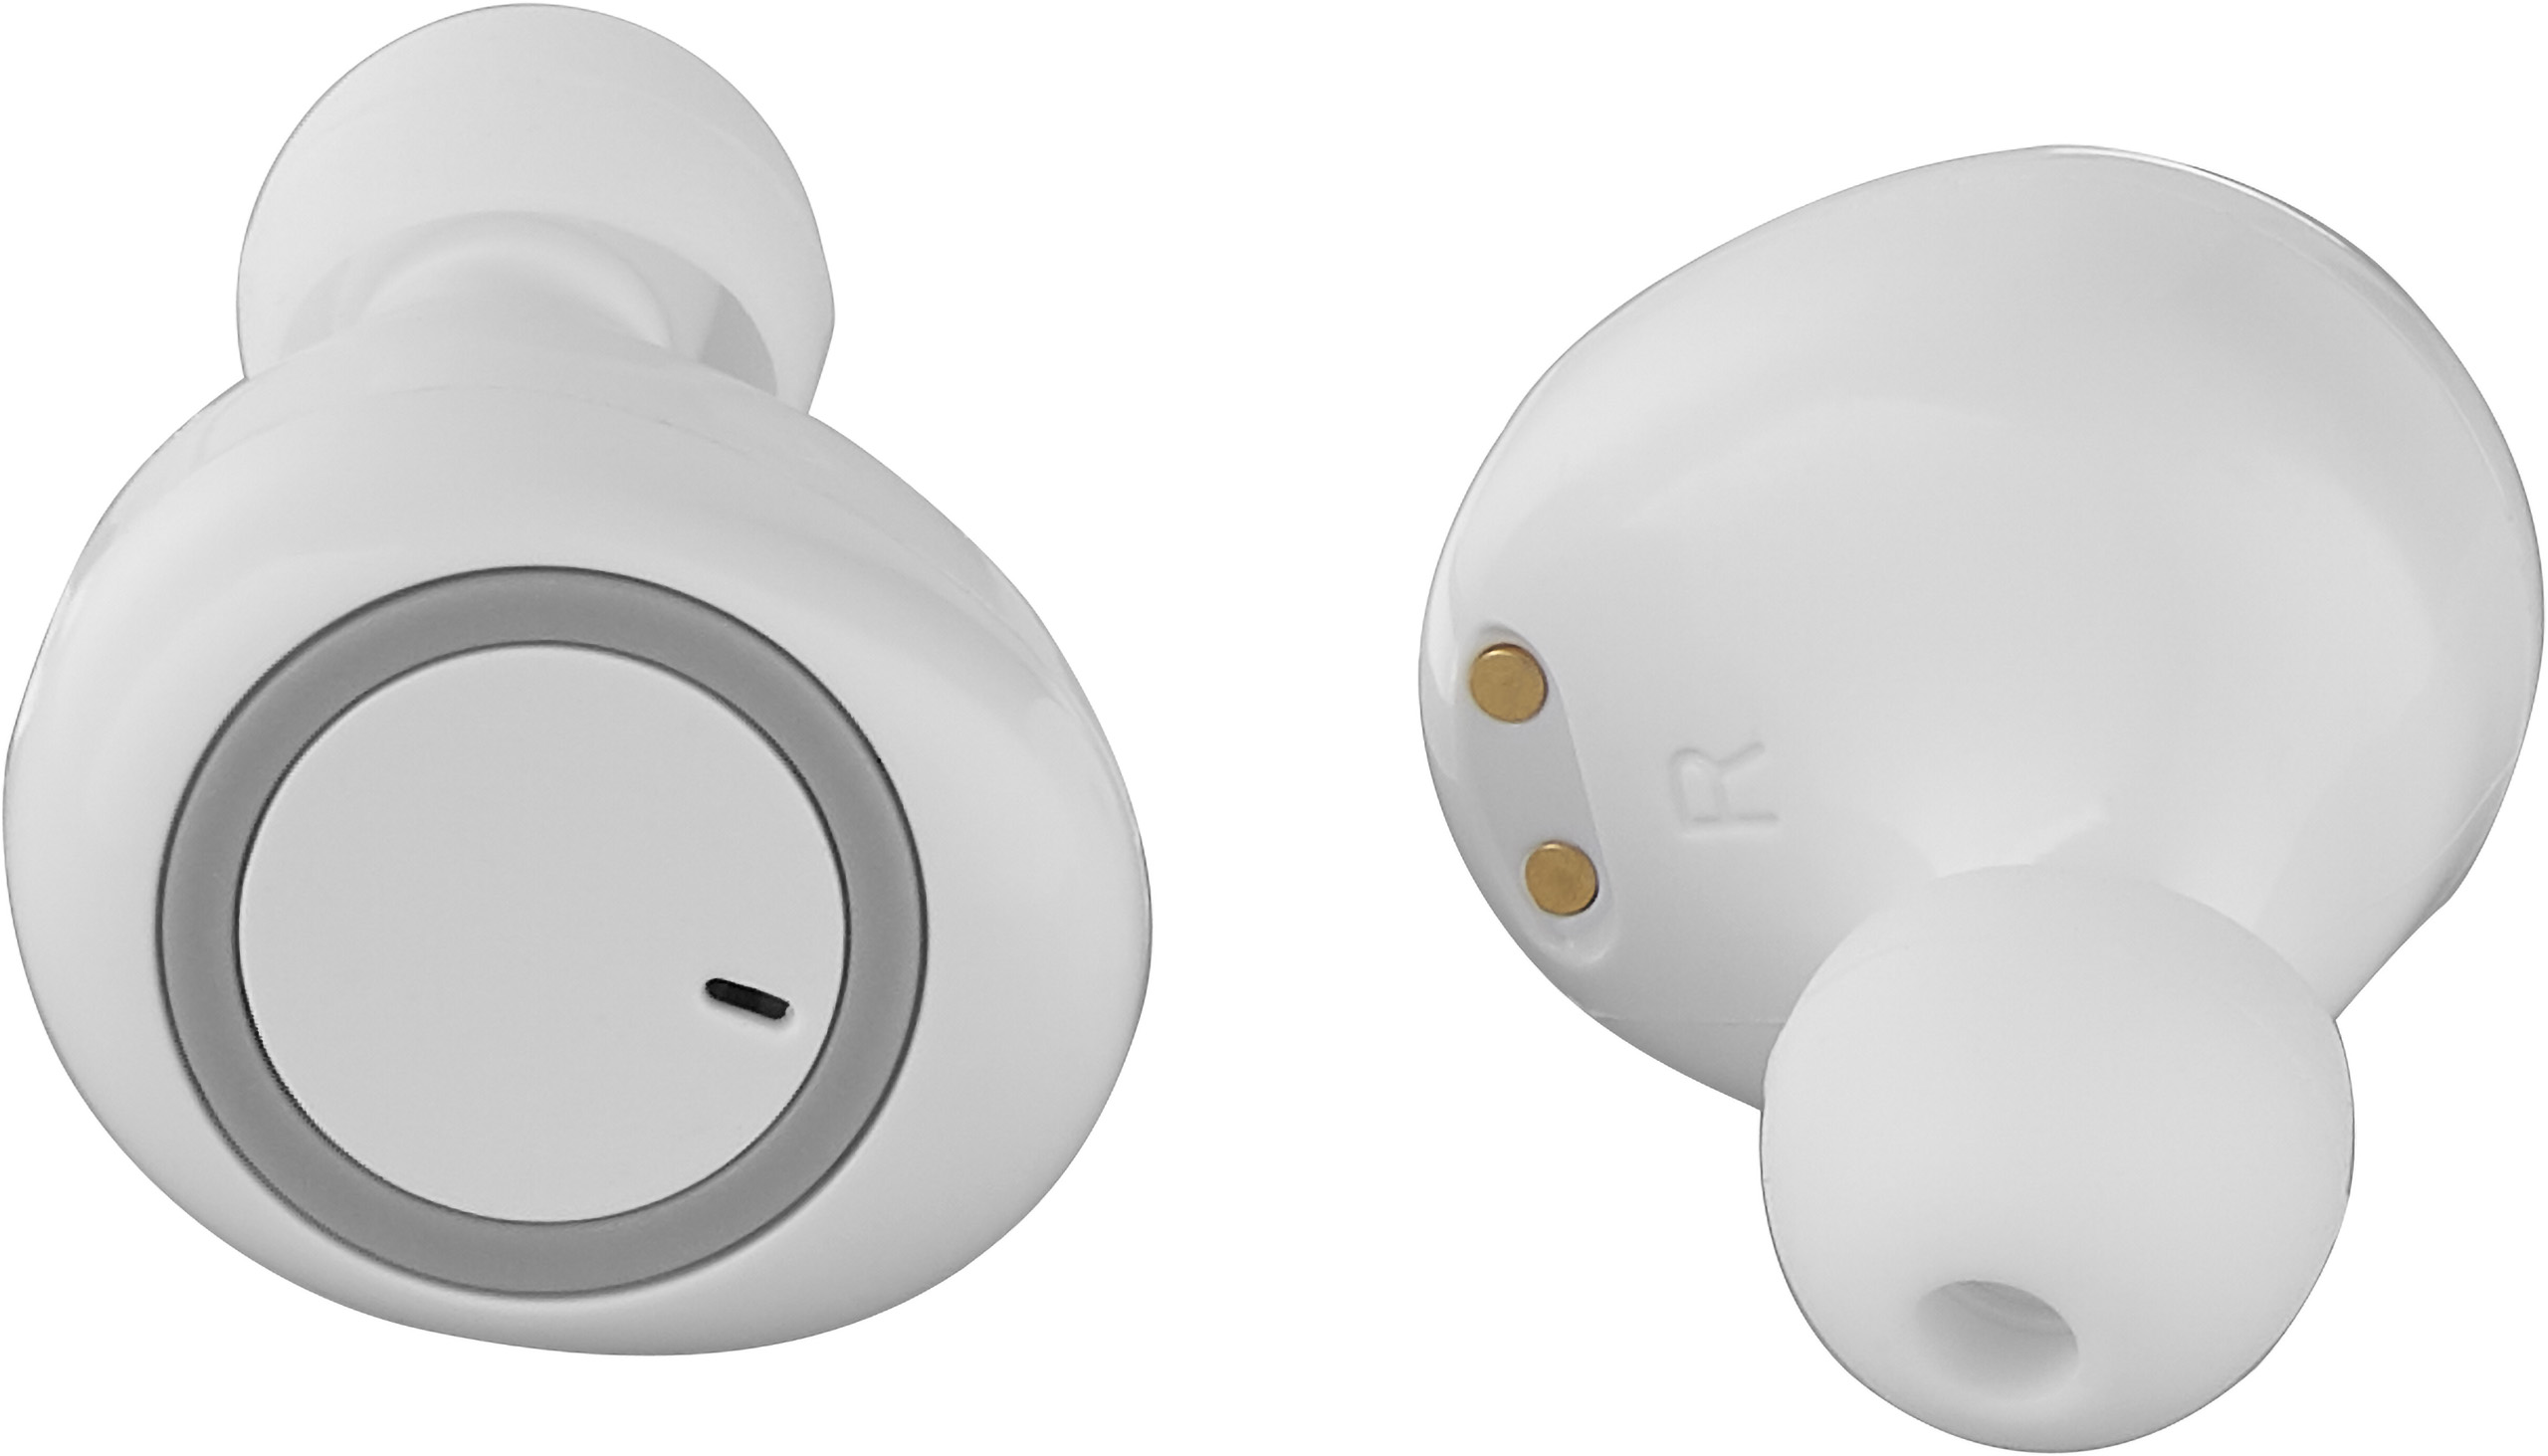 TWS Wireless 5.0 Earbuds white